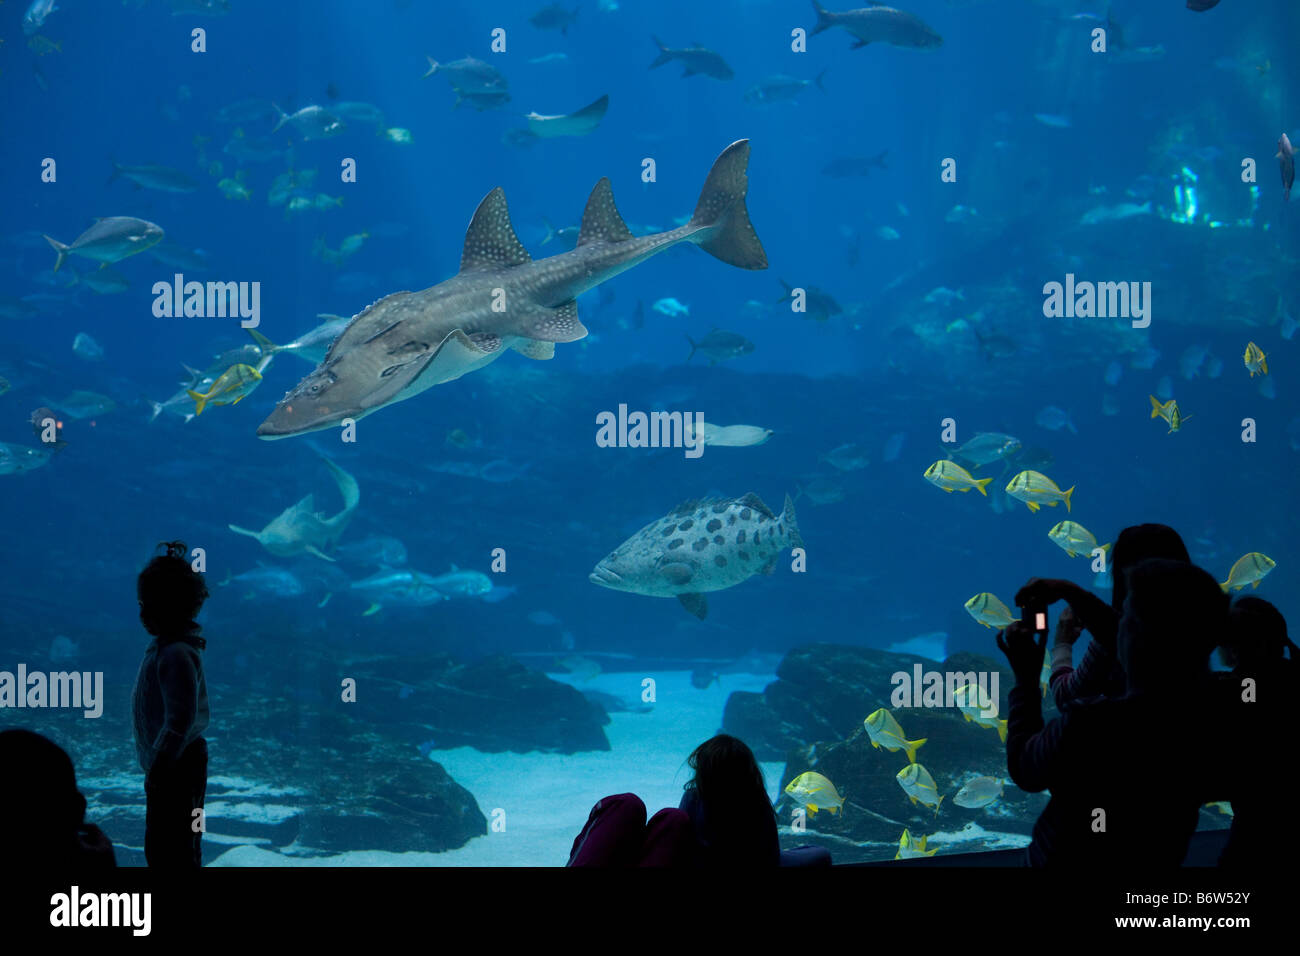 Vistors at the Georgia Aquarium in Atlanta, Georgia observe fish that swim through the largest fish tank in the world. Stock Photo